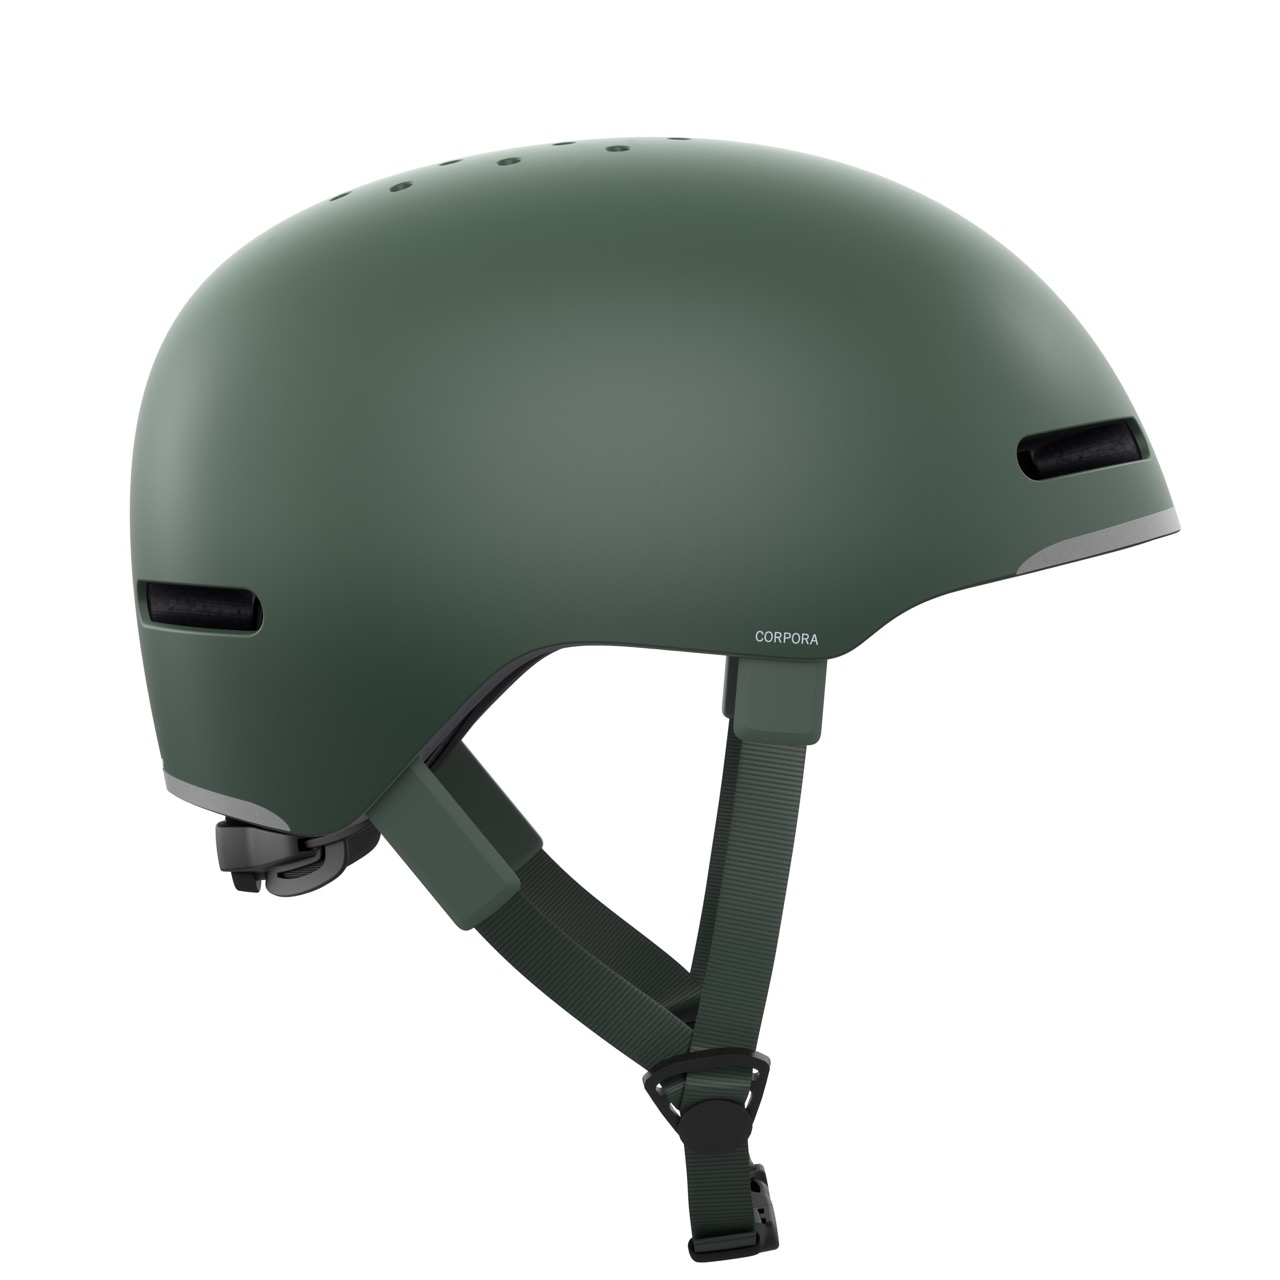 POC Corpora helmet